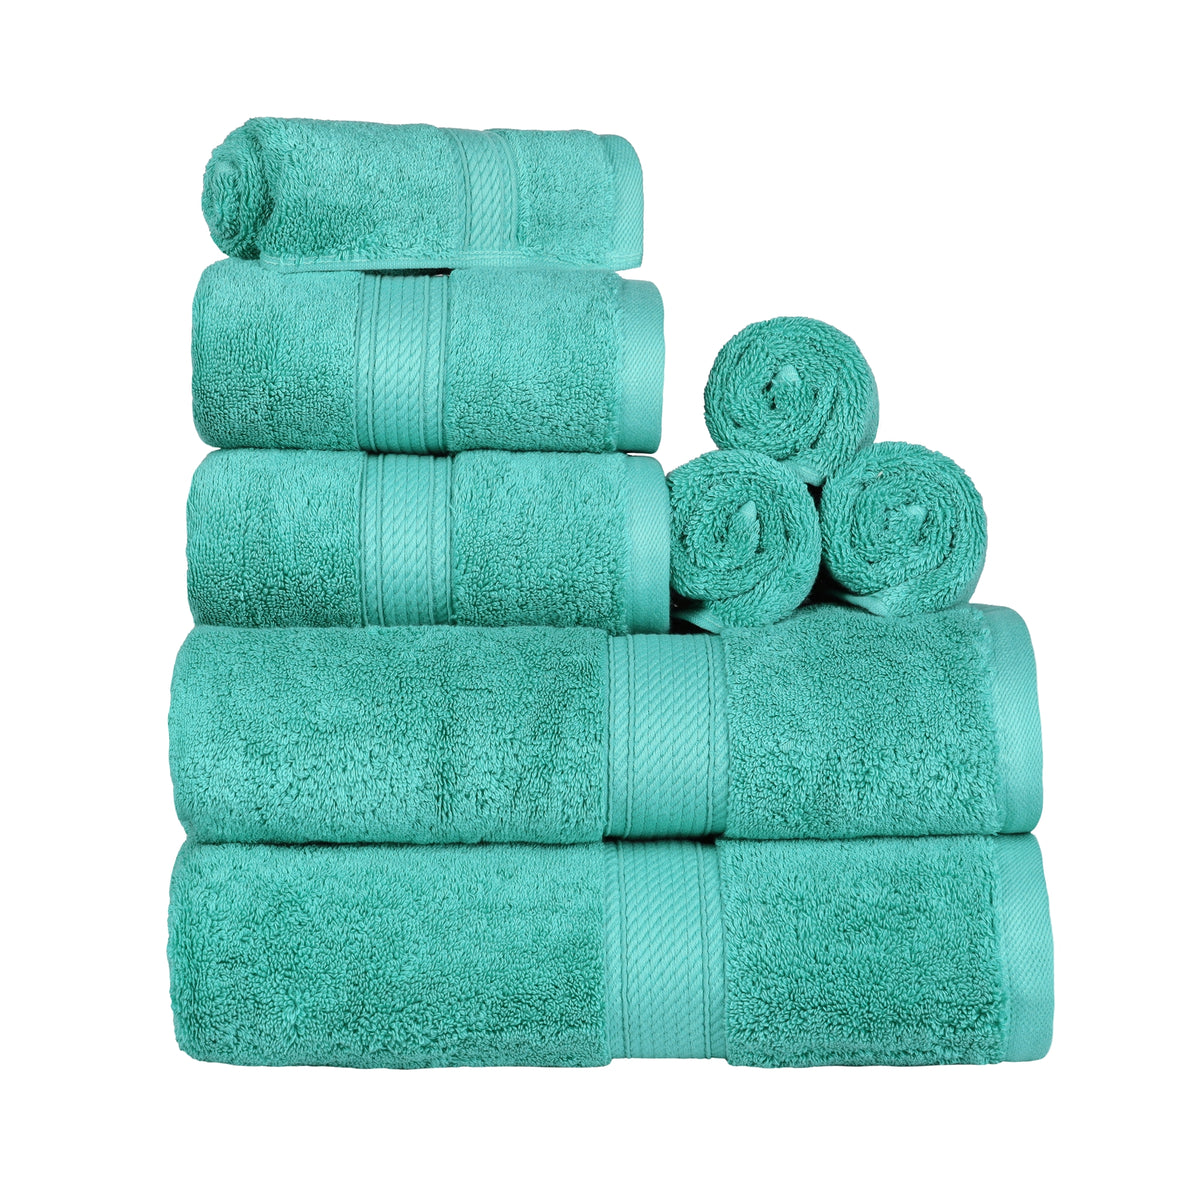 Egyptian Cotton Heavyweight 8 Piece Towel Set - Turquoise